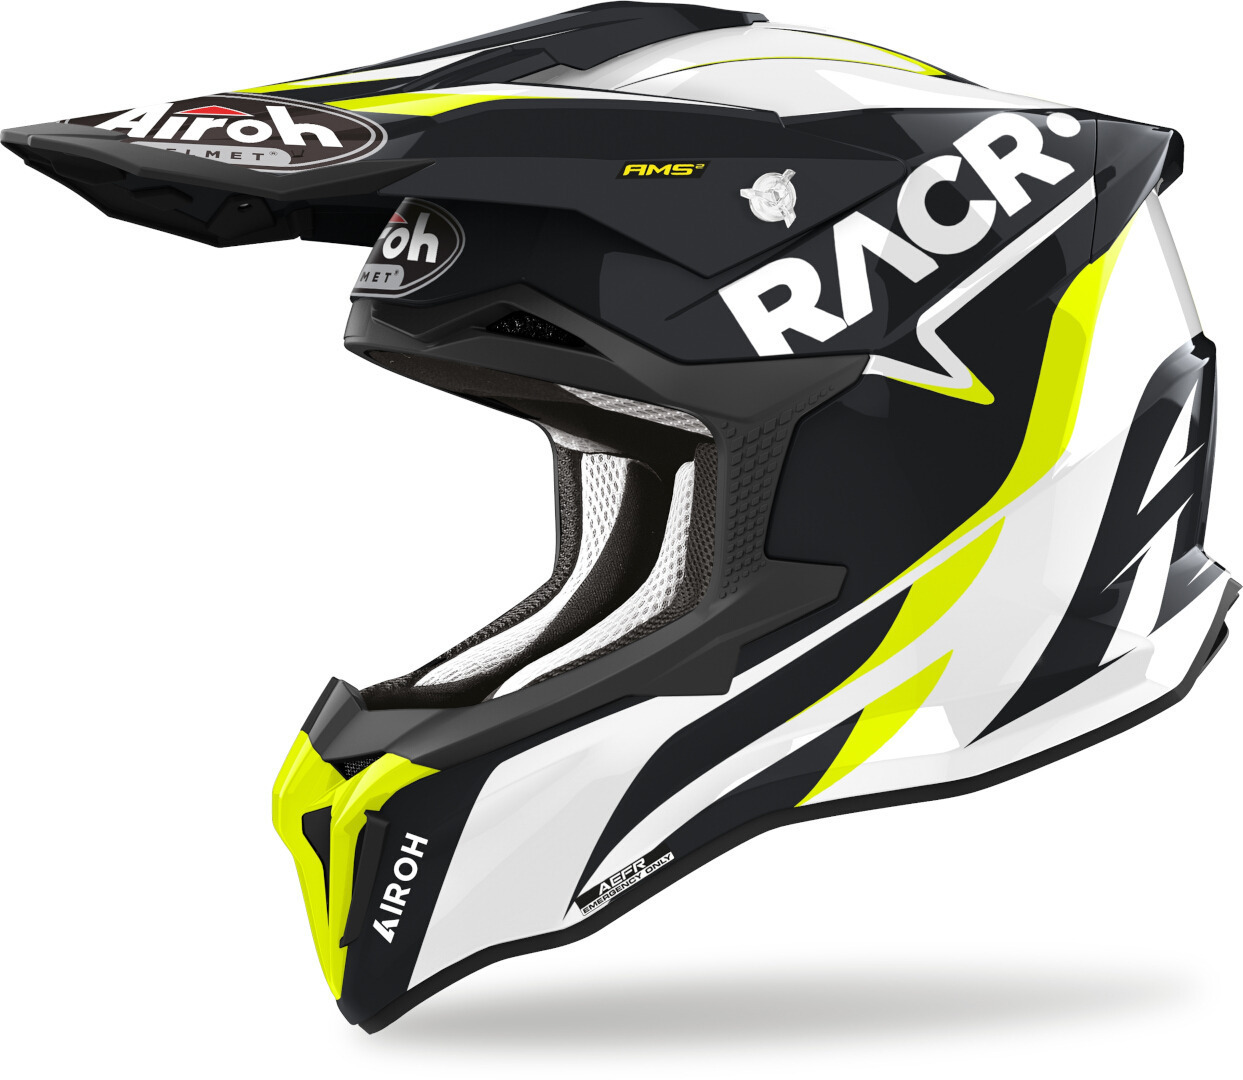 Airoh Strycker Racr Motocross Helm, schwarz-weiss-gelb, Größe L